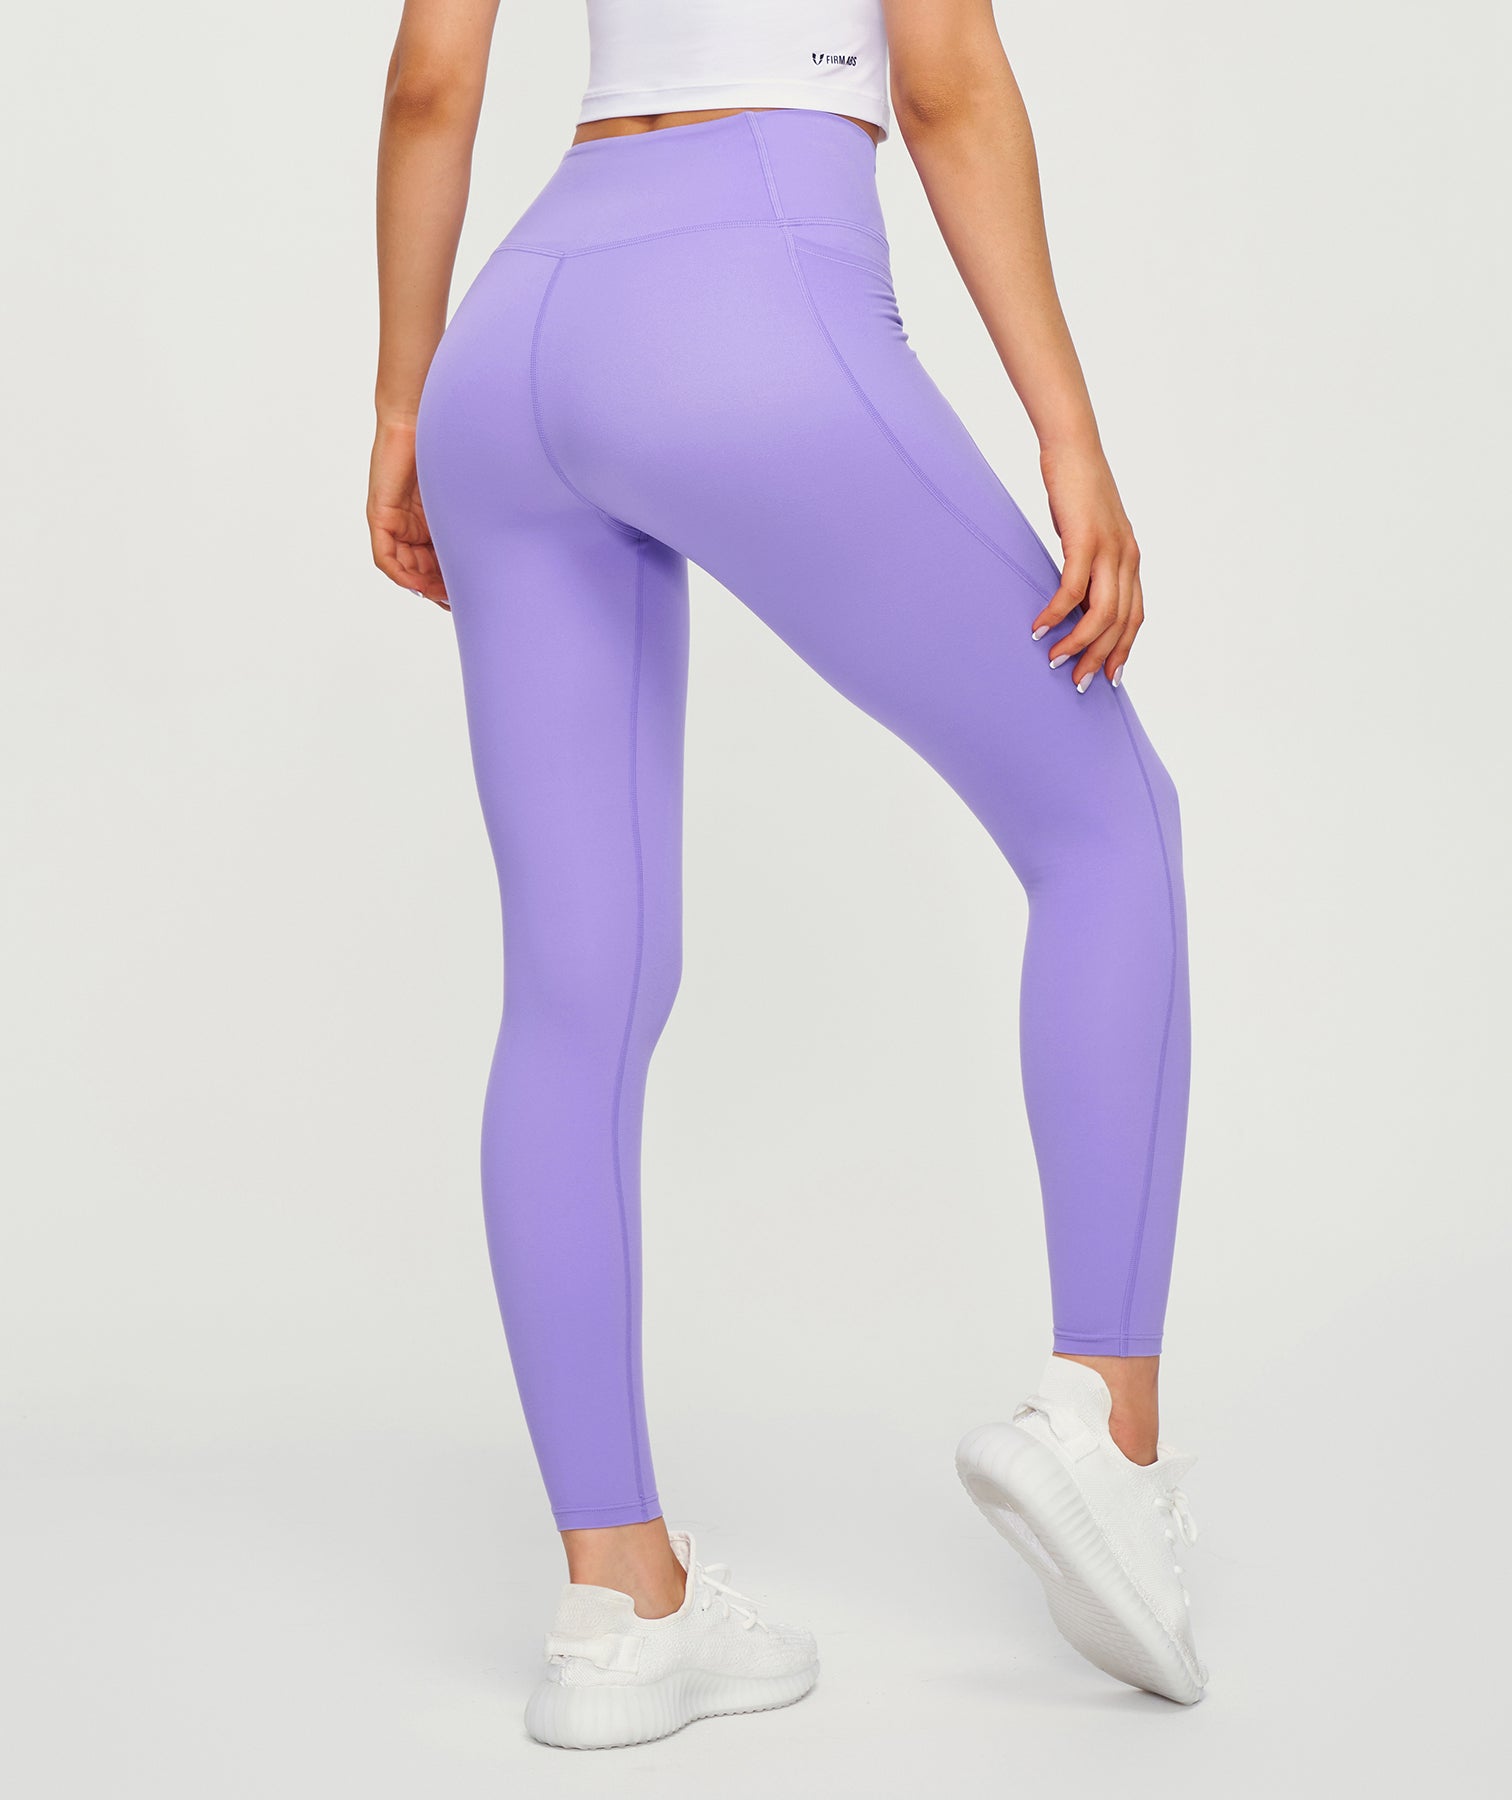 Assortment Street Mockingbird lavender gym leggings Inconvenience